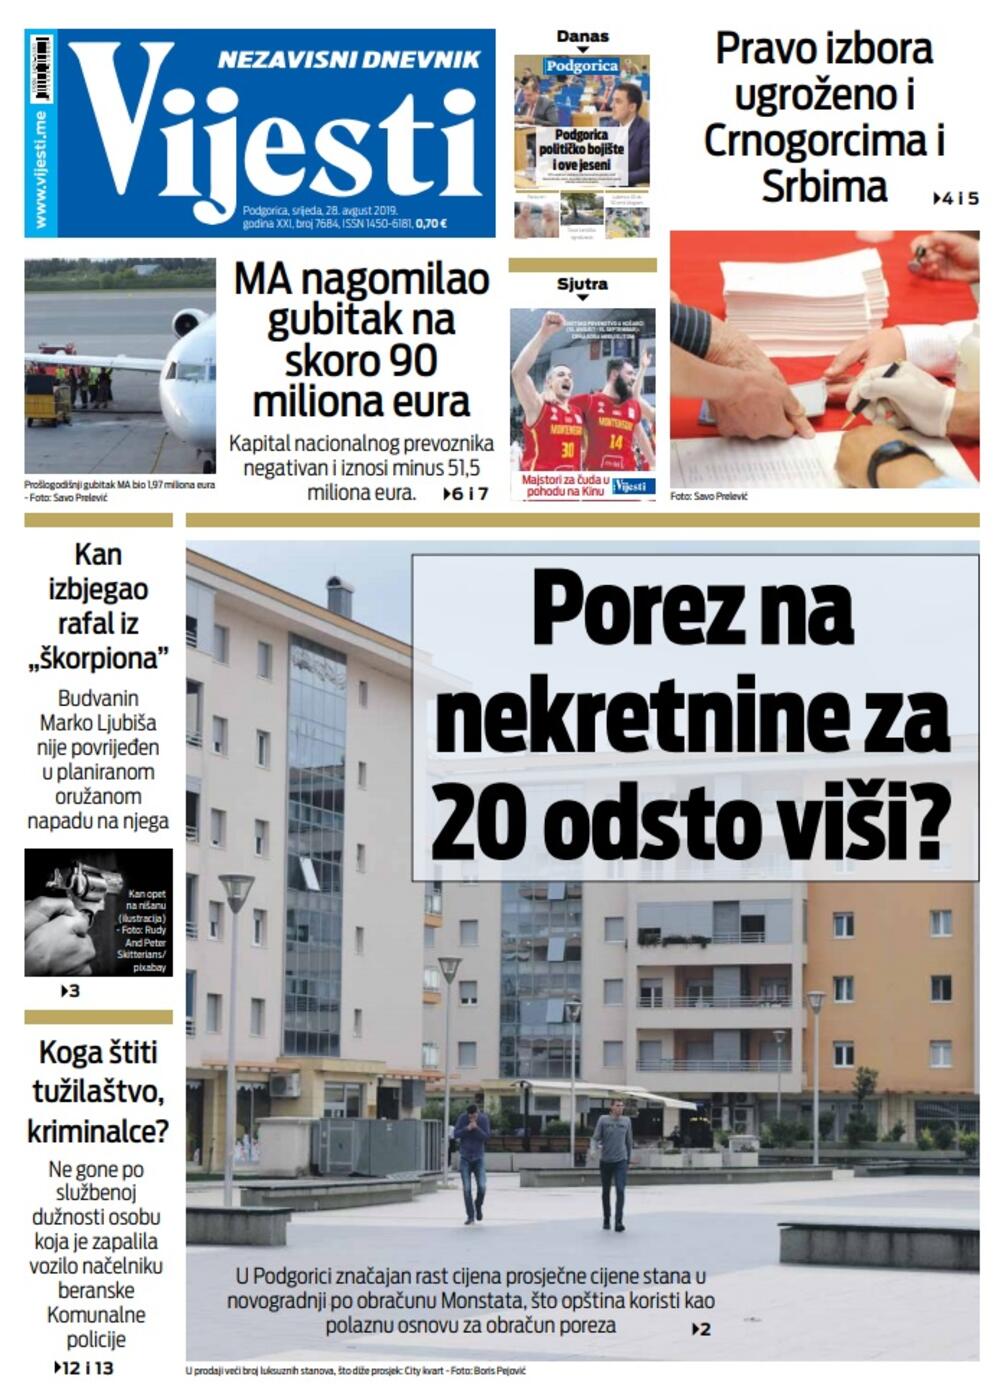 Naslovna strana "Vijesti" za 28. avgust